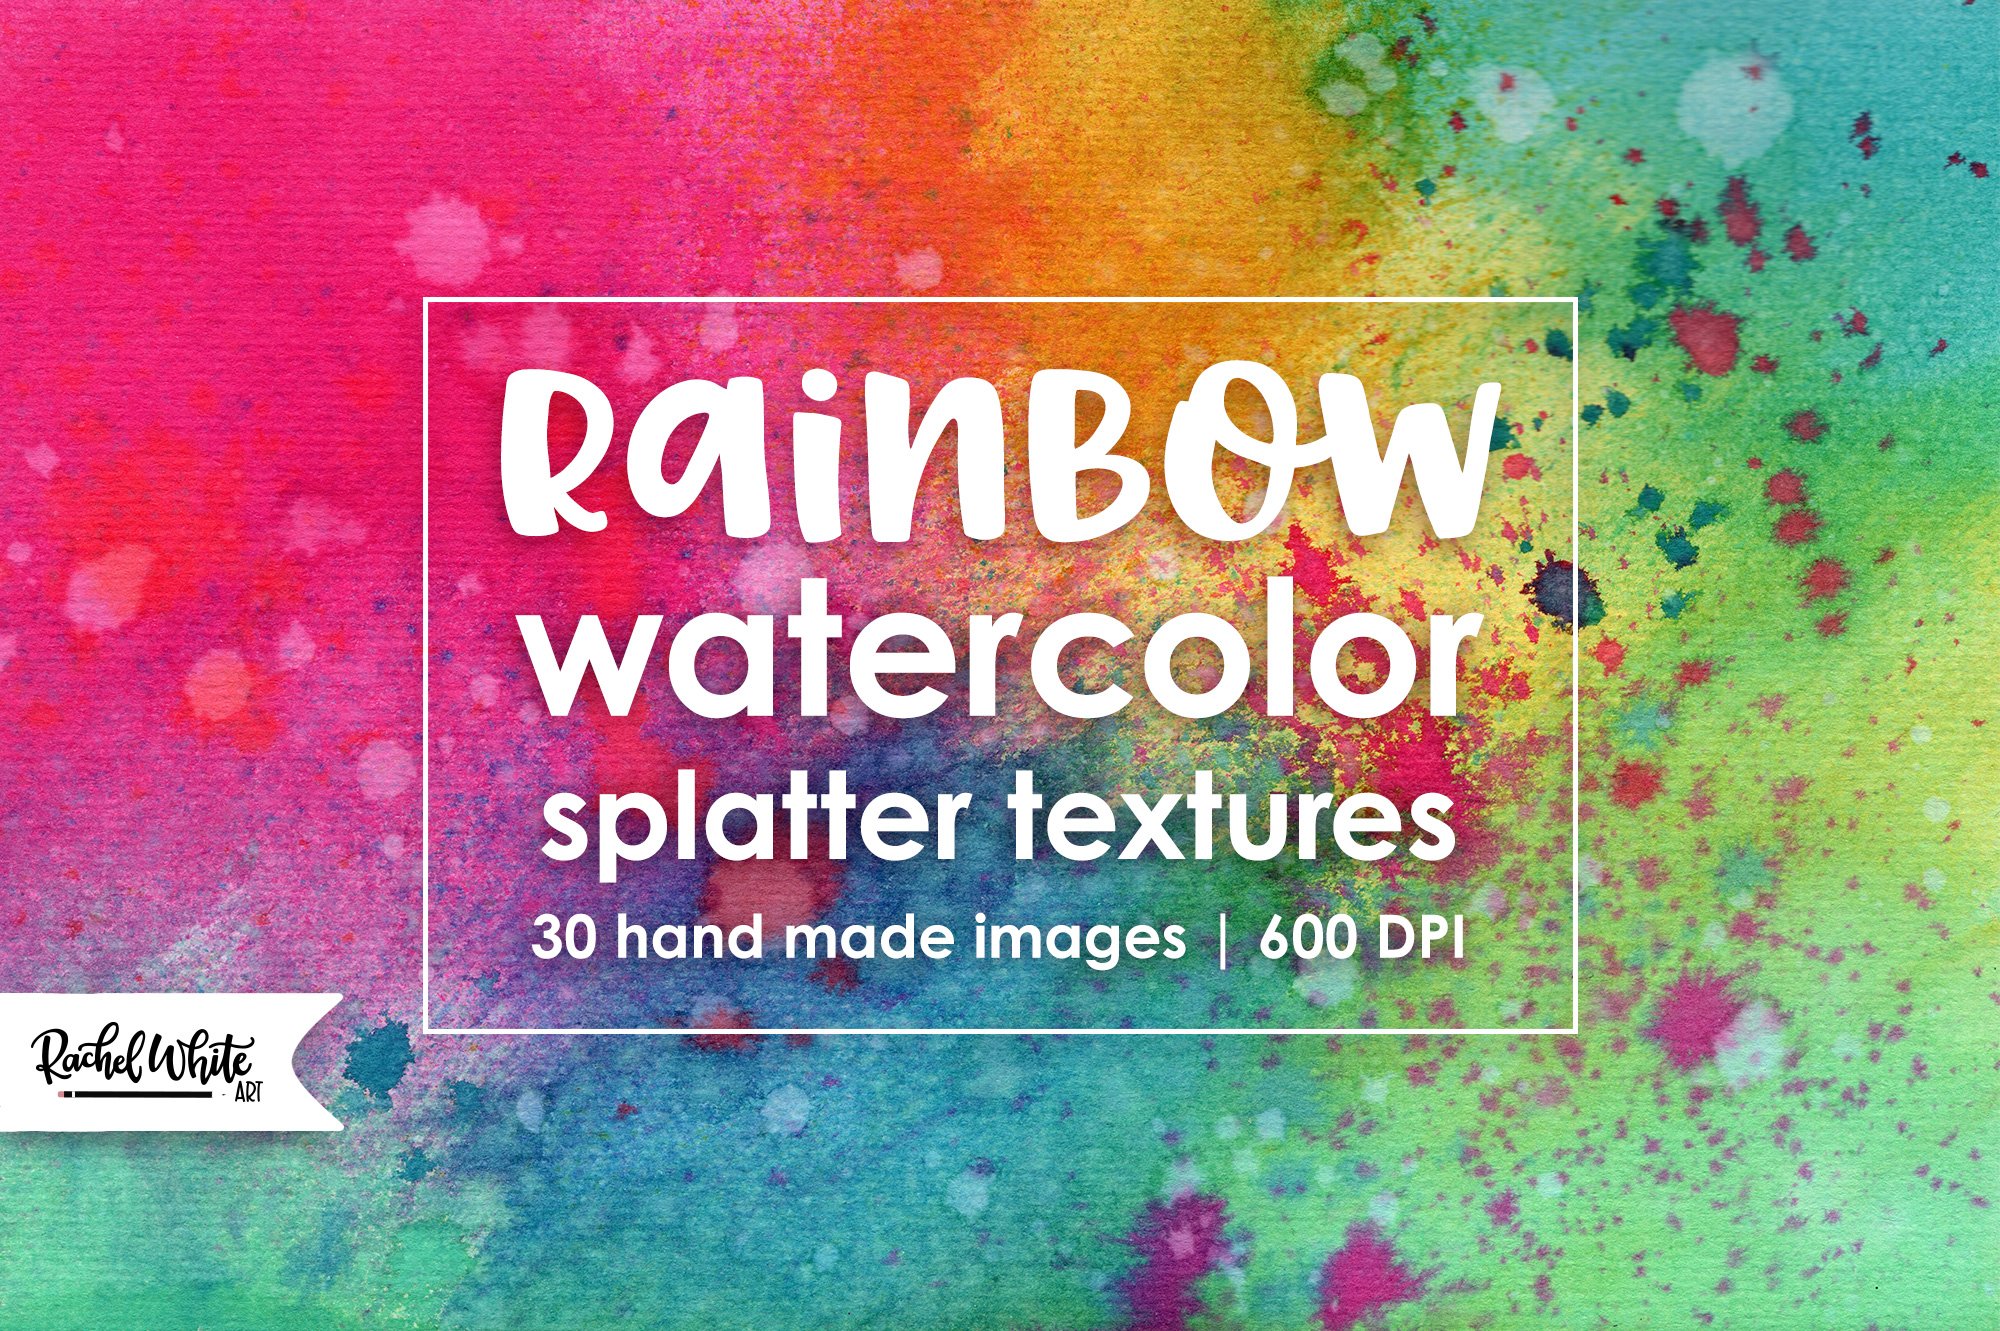 Rainbow Watercolor Splatter Textures cover image.